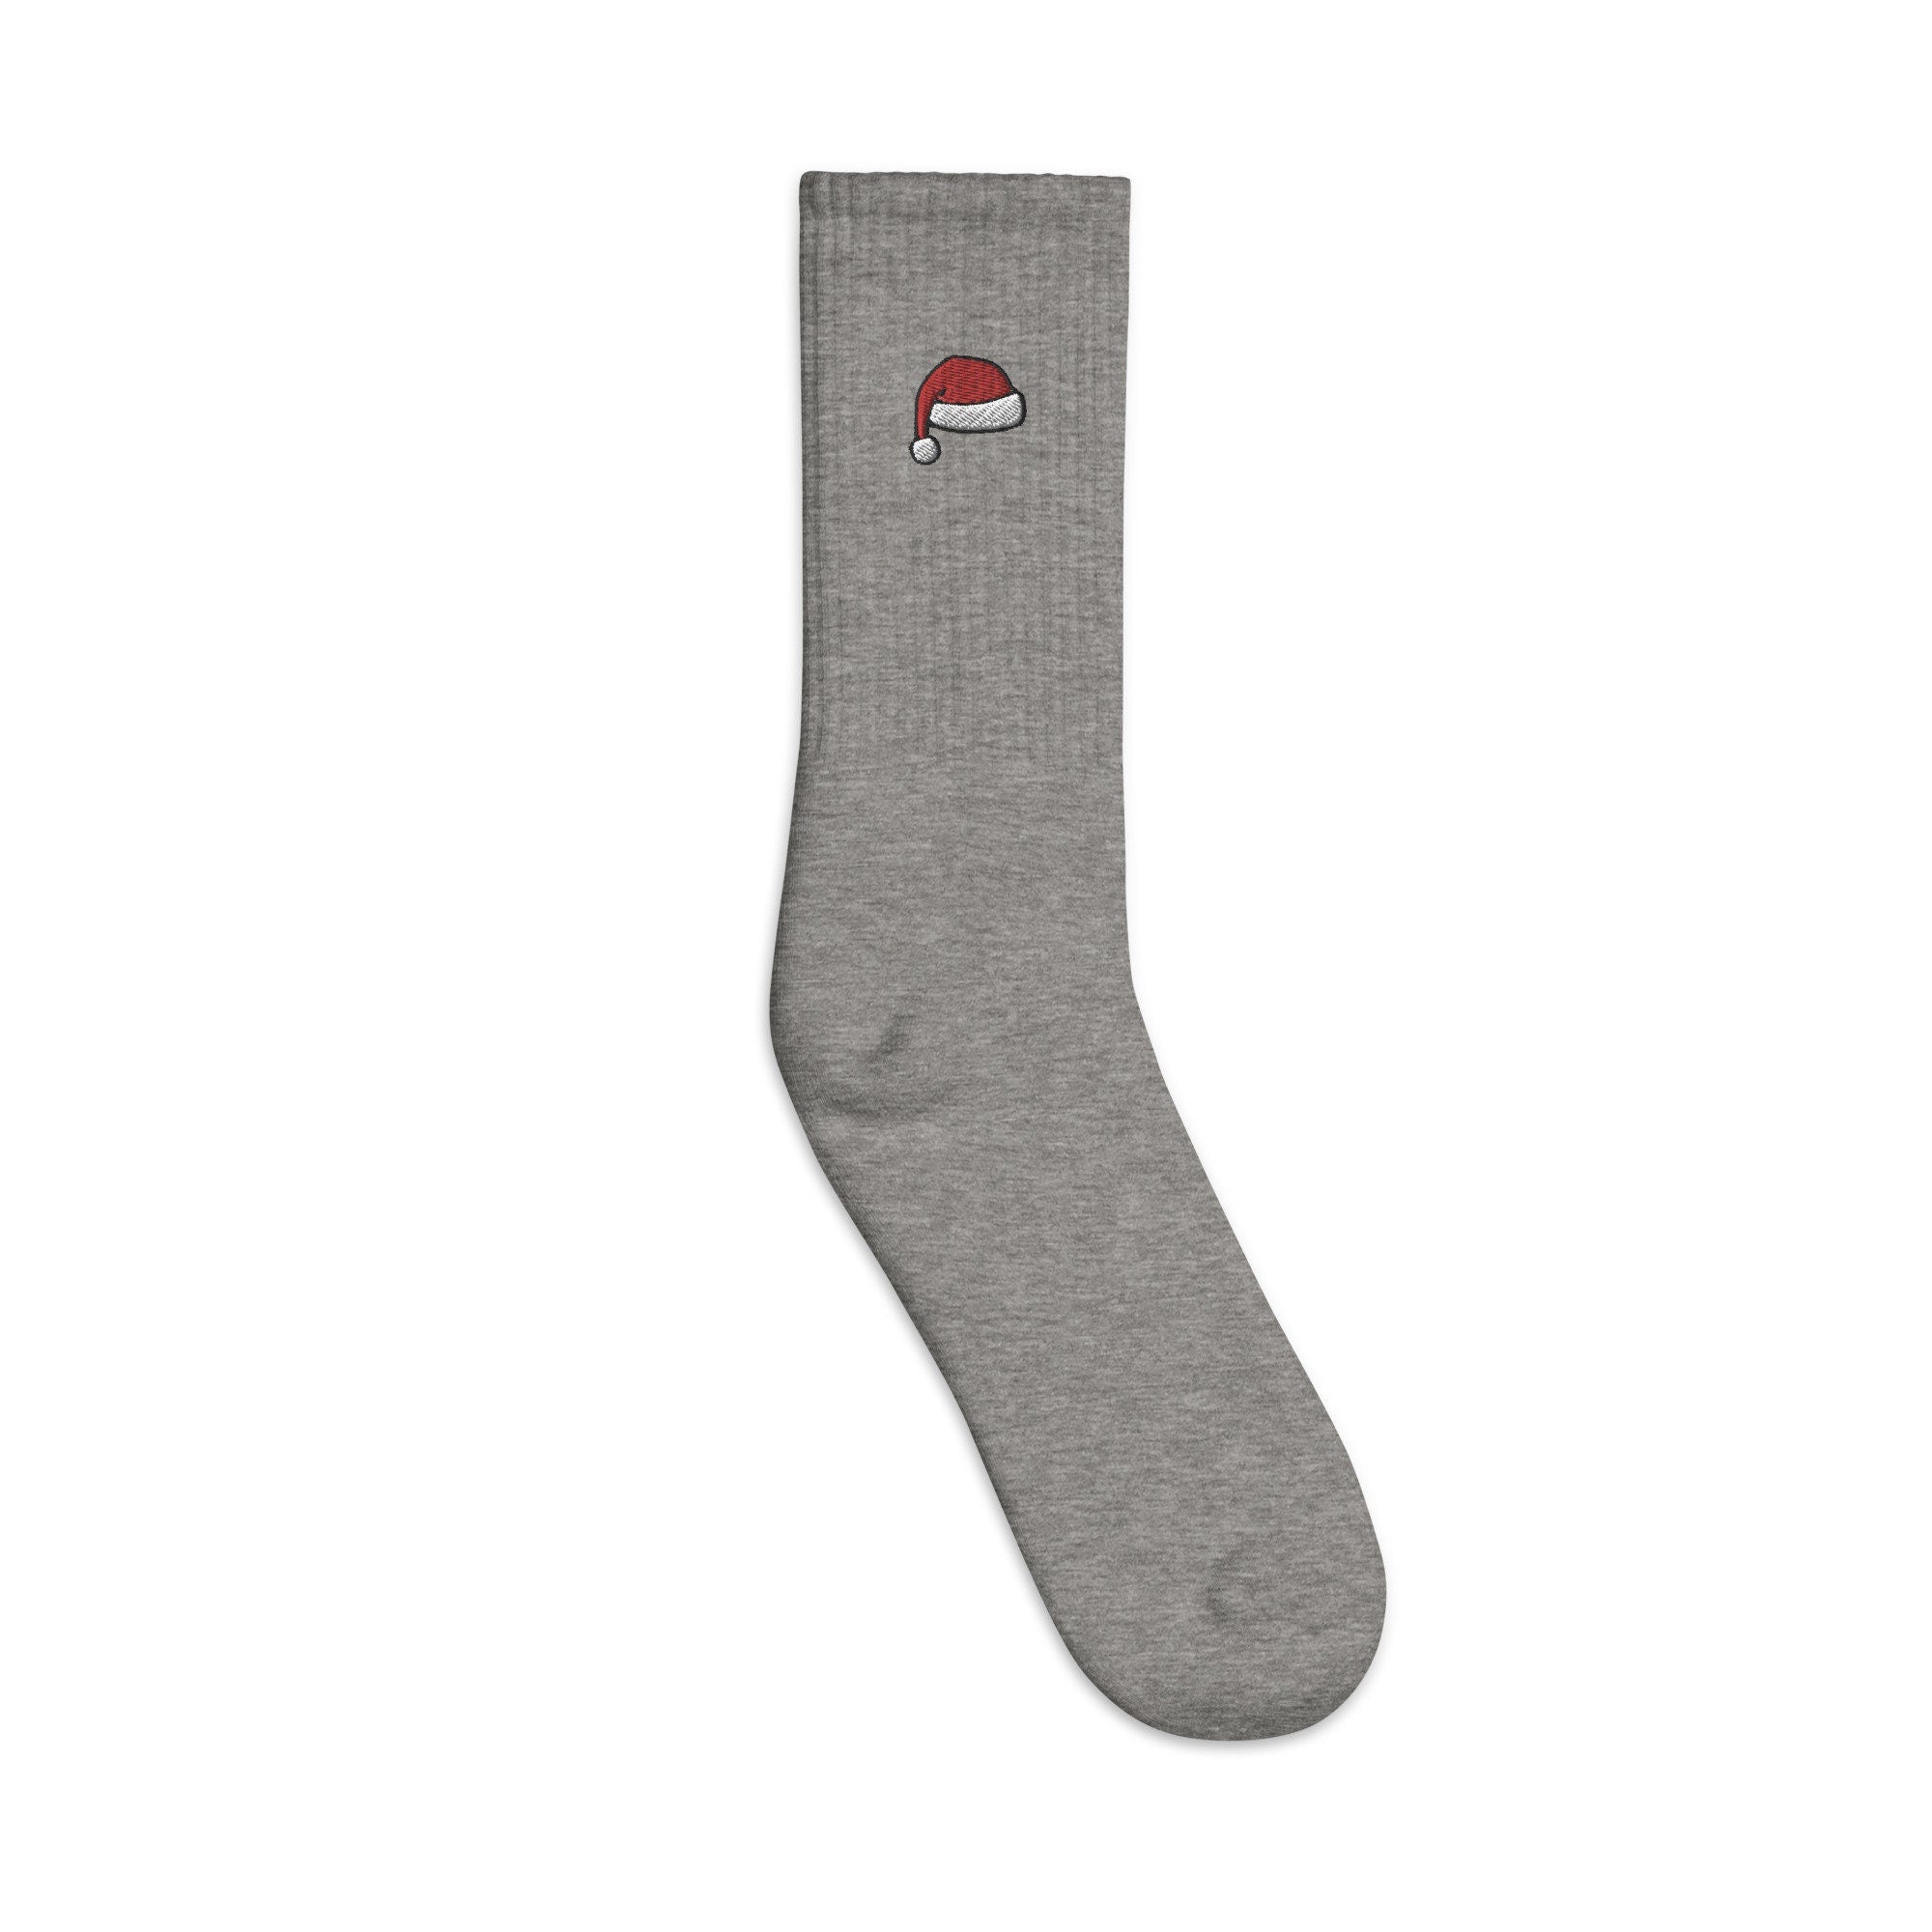 Santa Hat Embroidered Socks, Santa Premium Embroidered Socks, Long Socks Gift - Multiple Colors